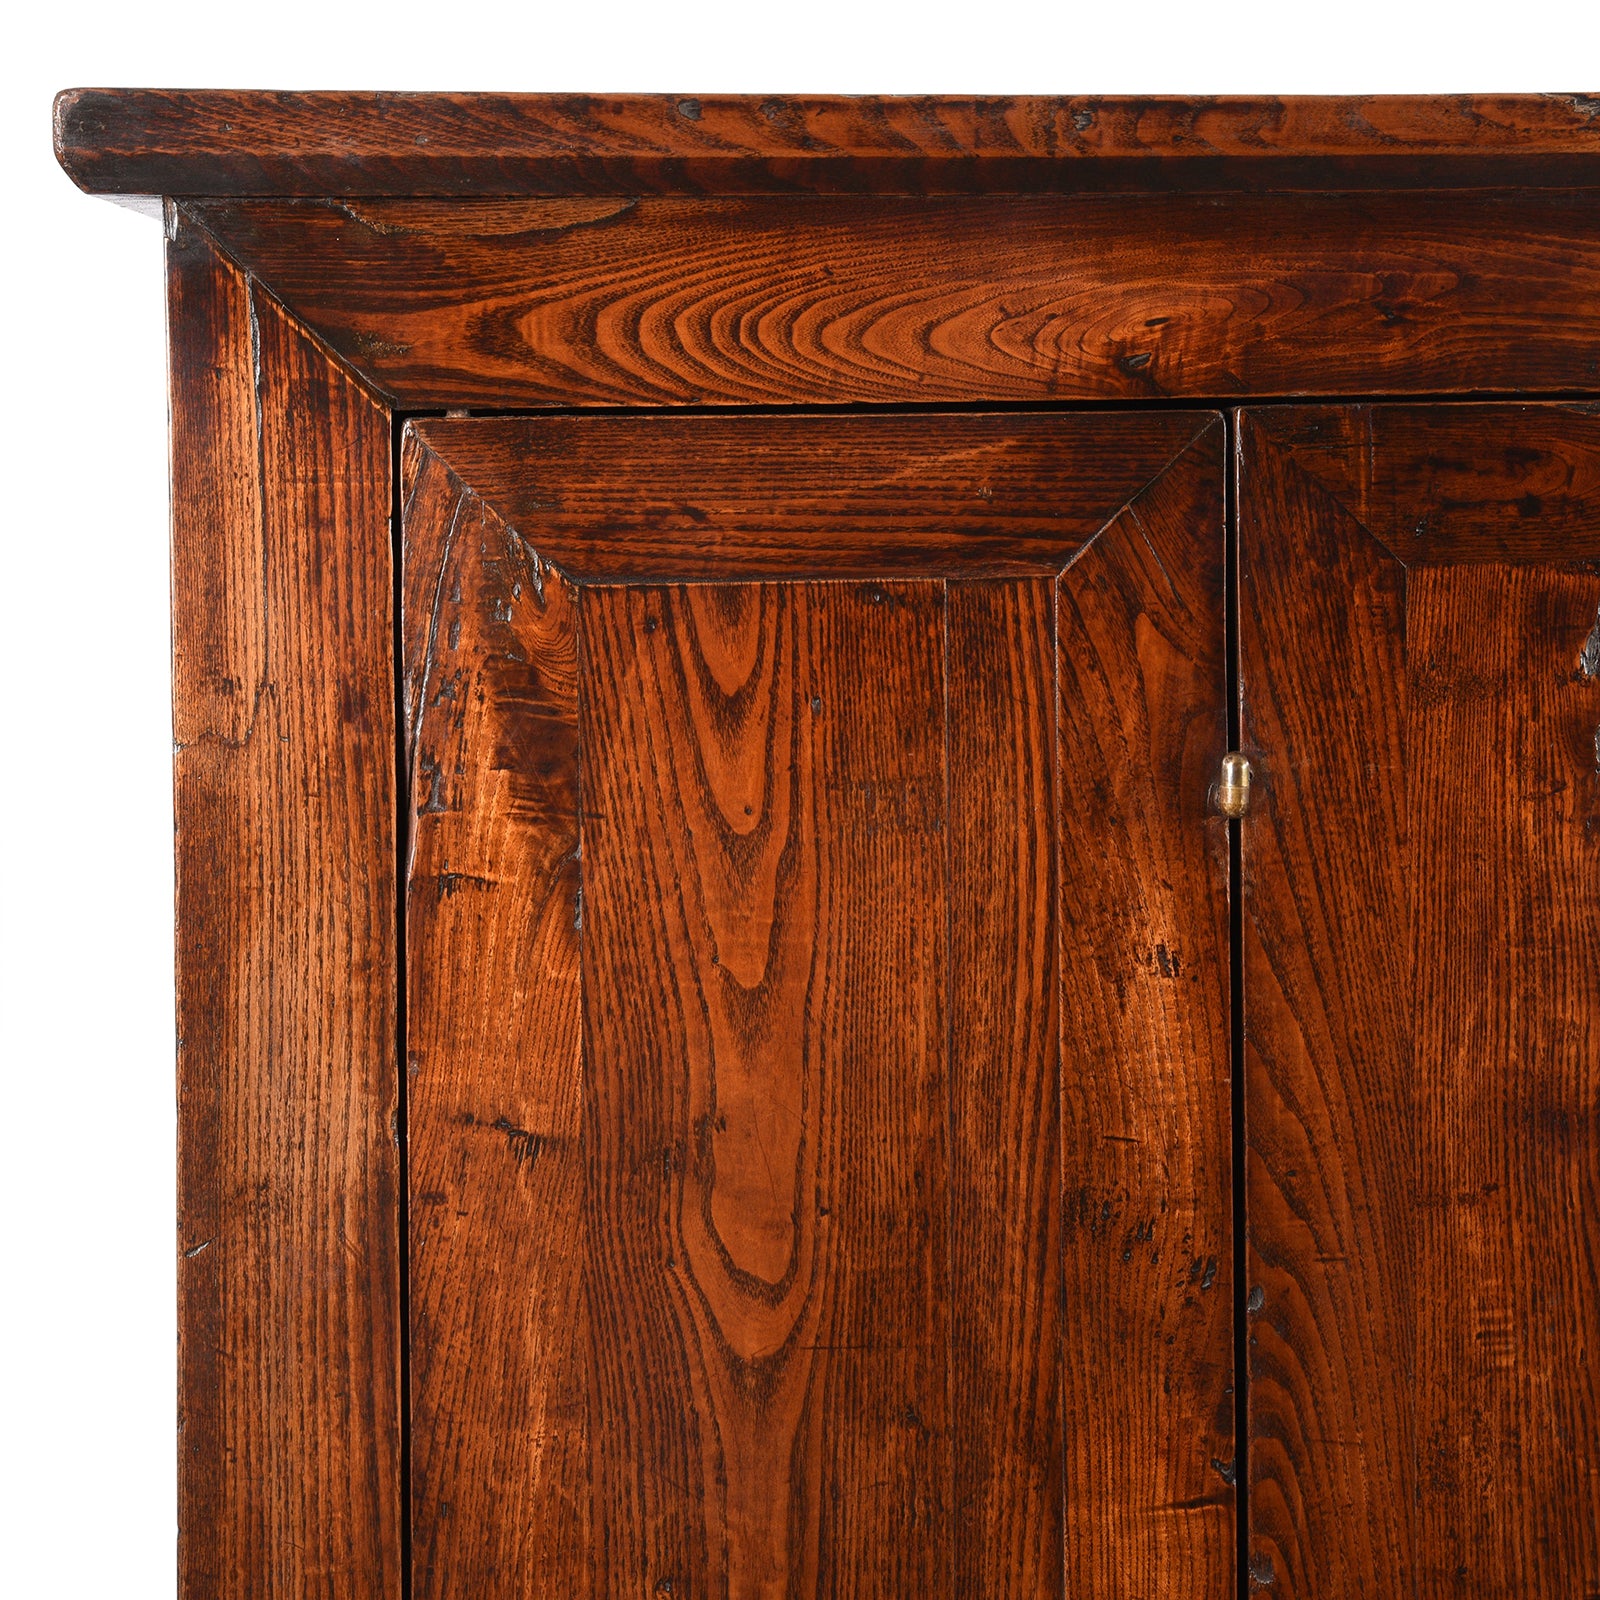 Antique Elm Wardrobe Cabinet From Gansu - 19th Century | Indigo Antiques